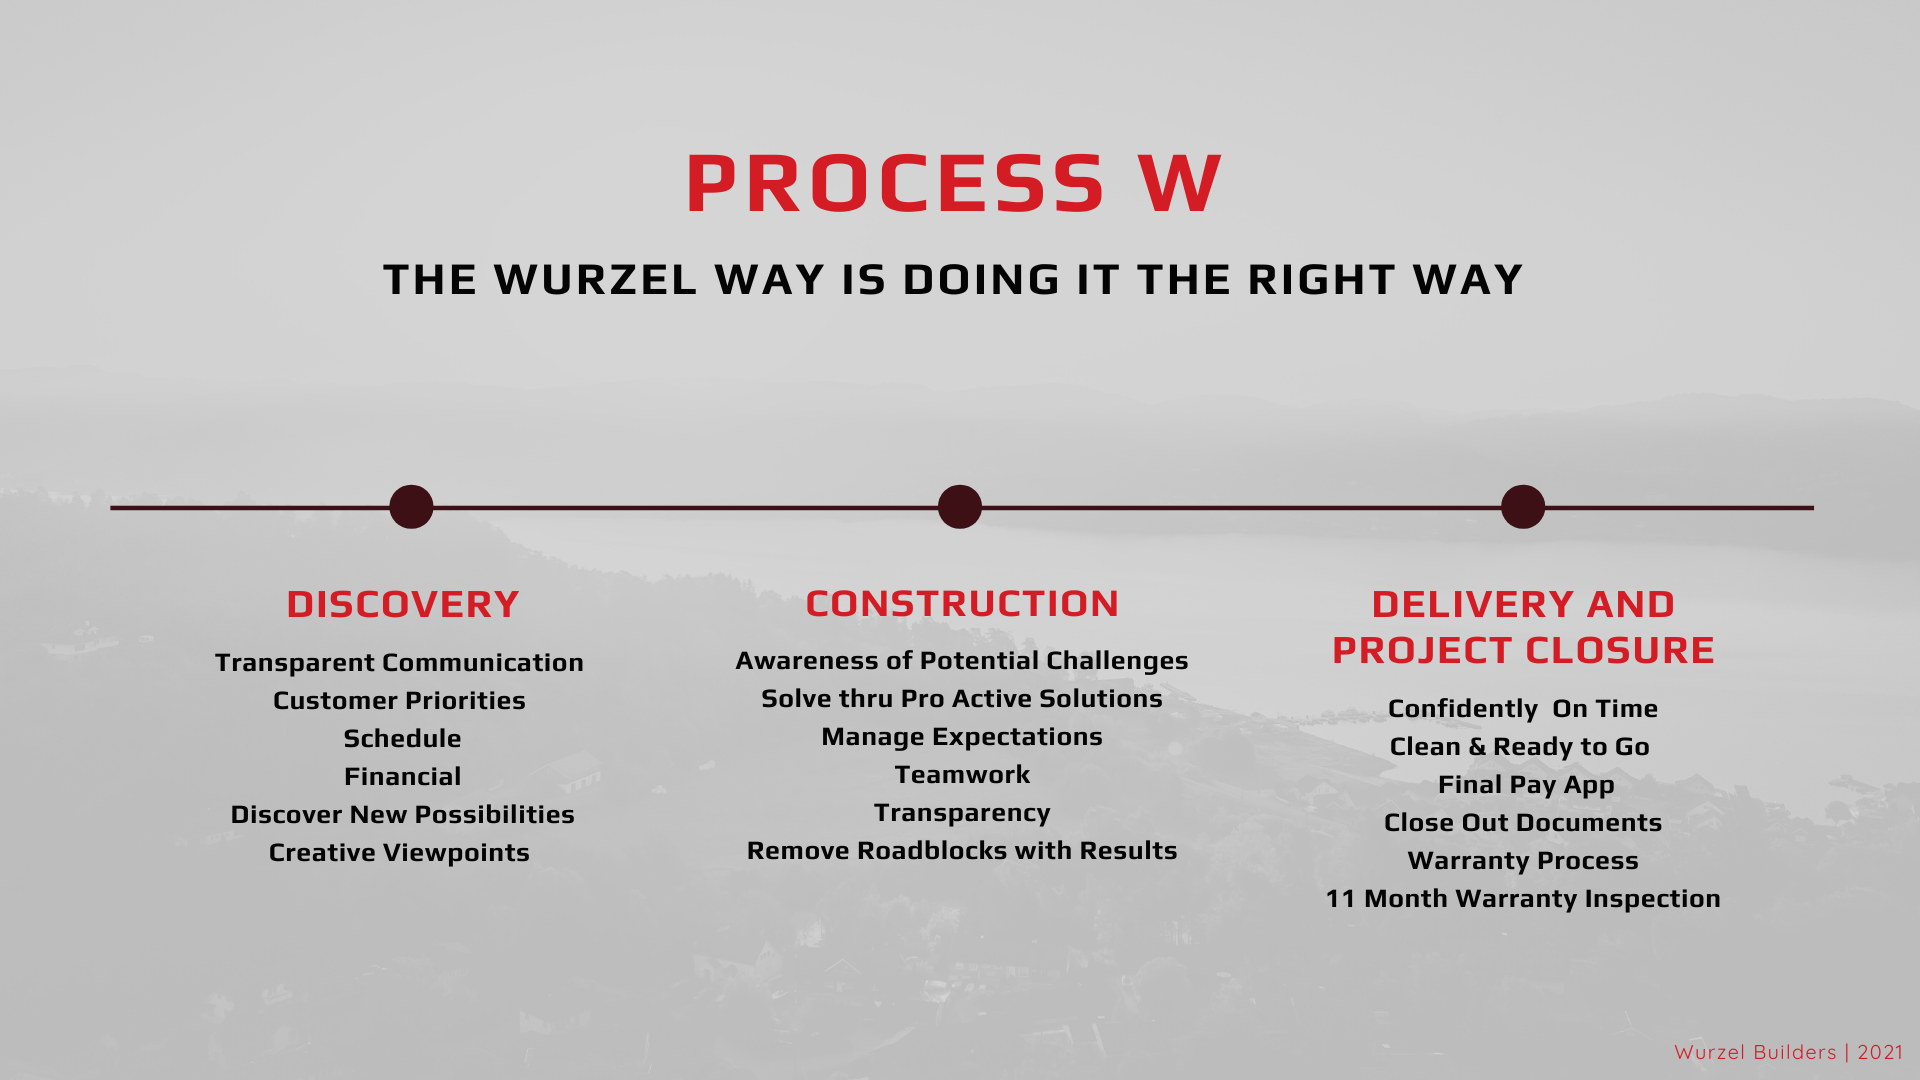 Process W - The Wurzel Process